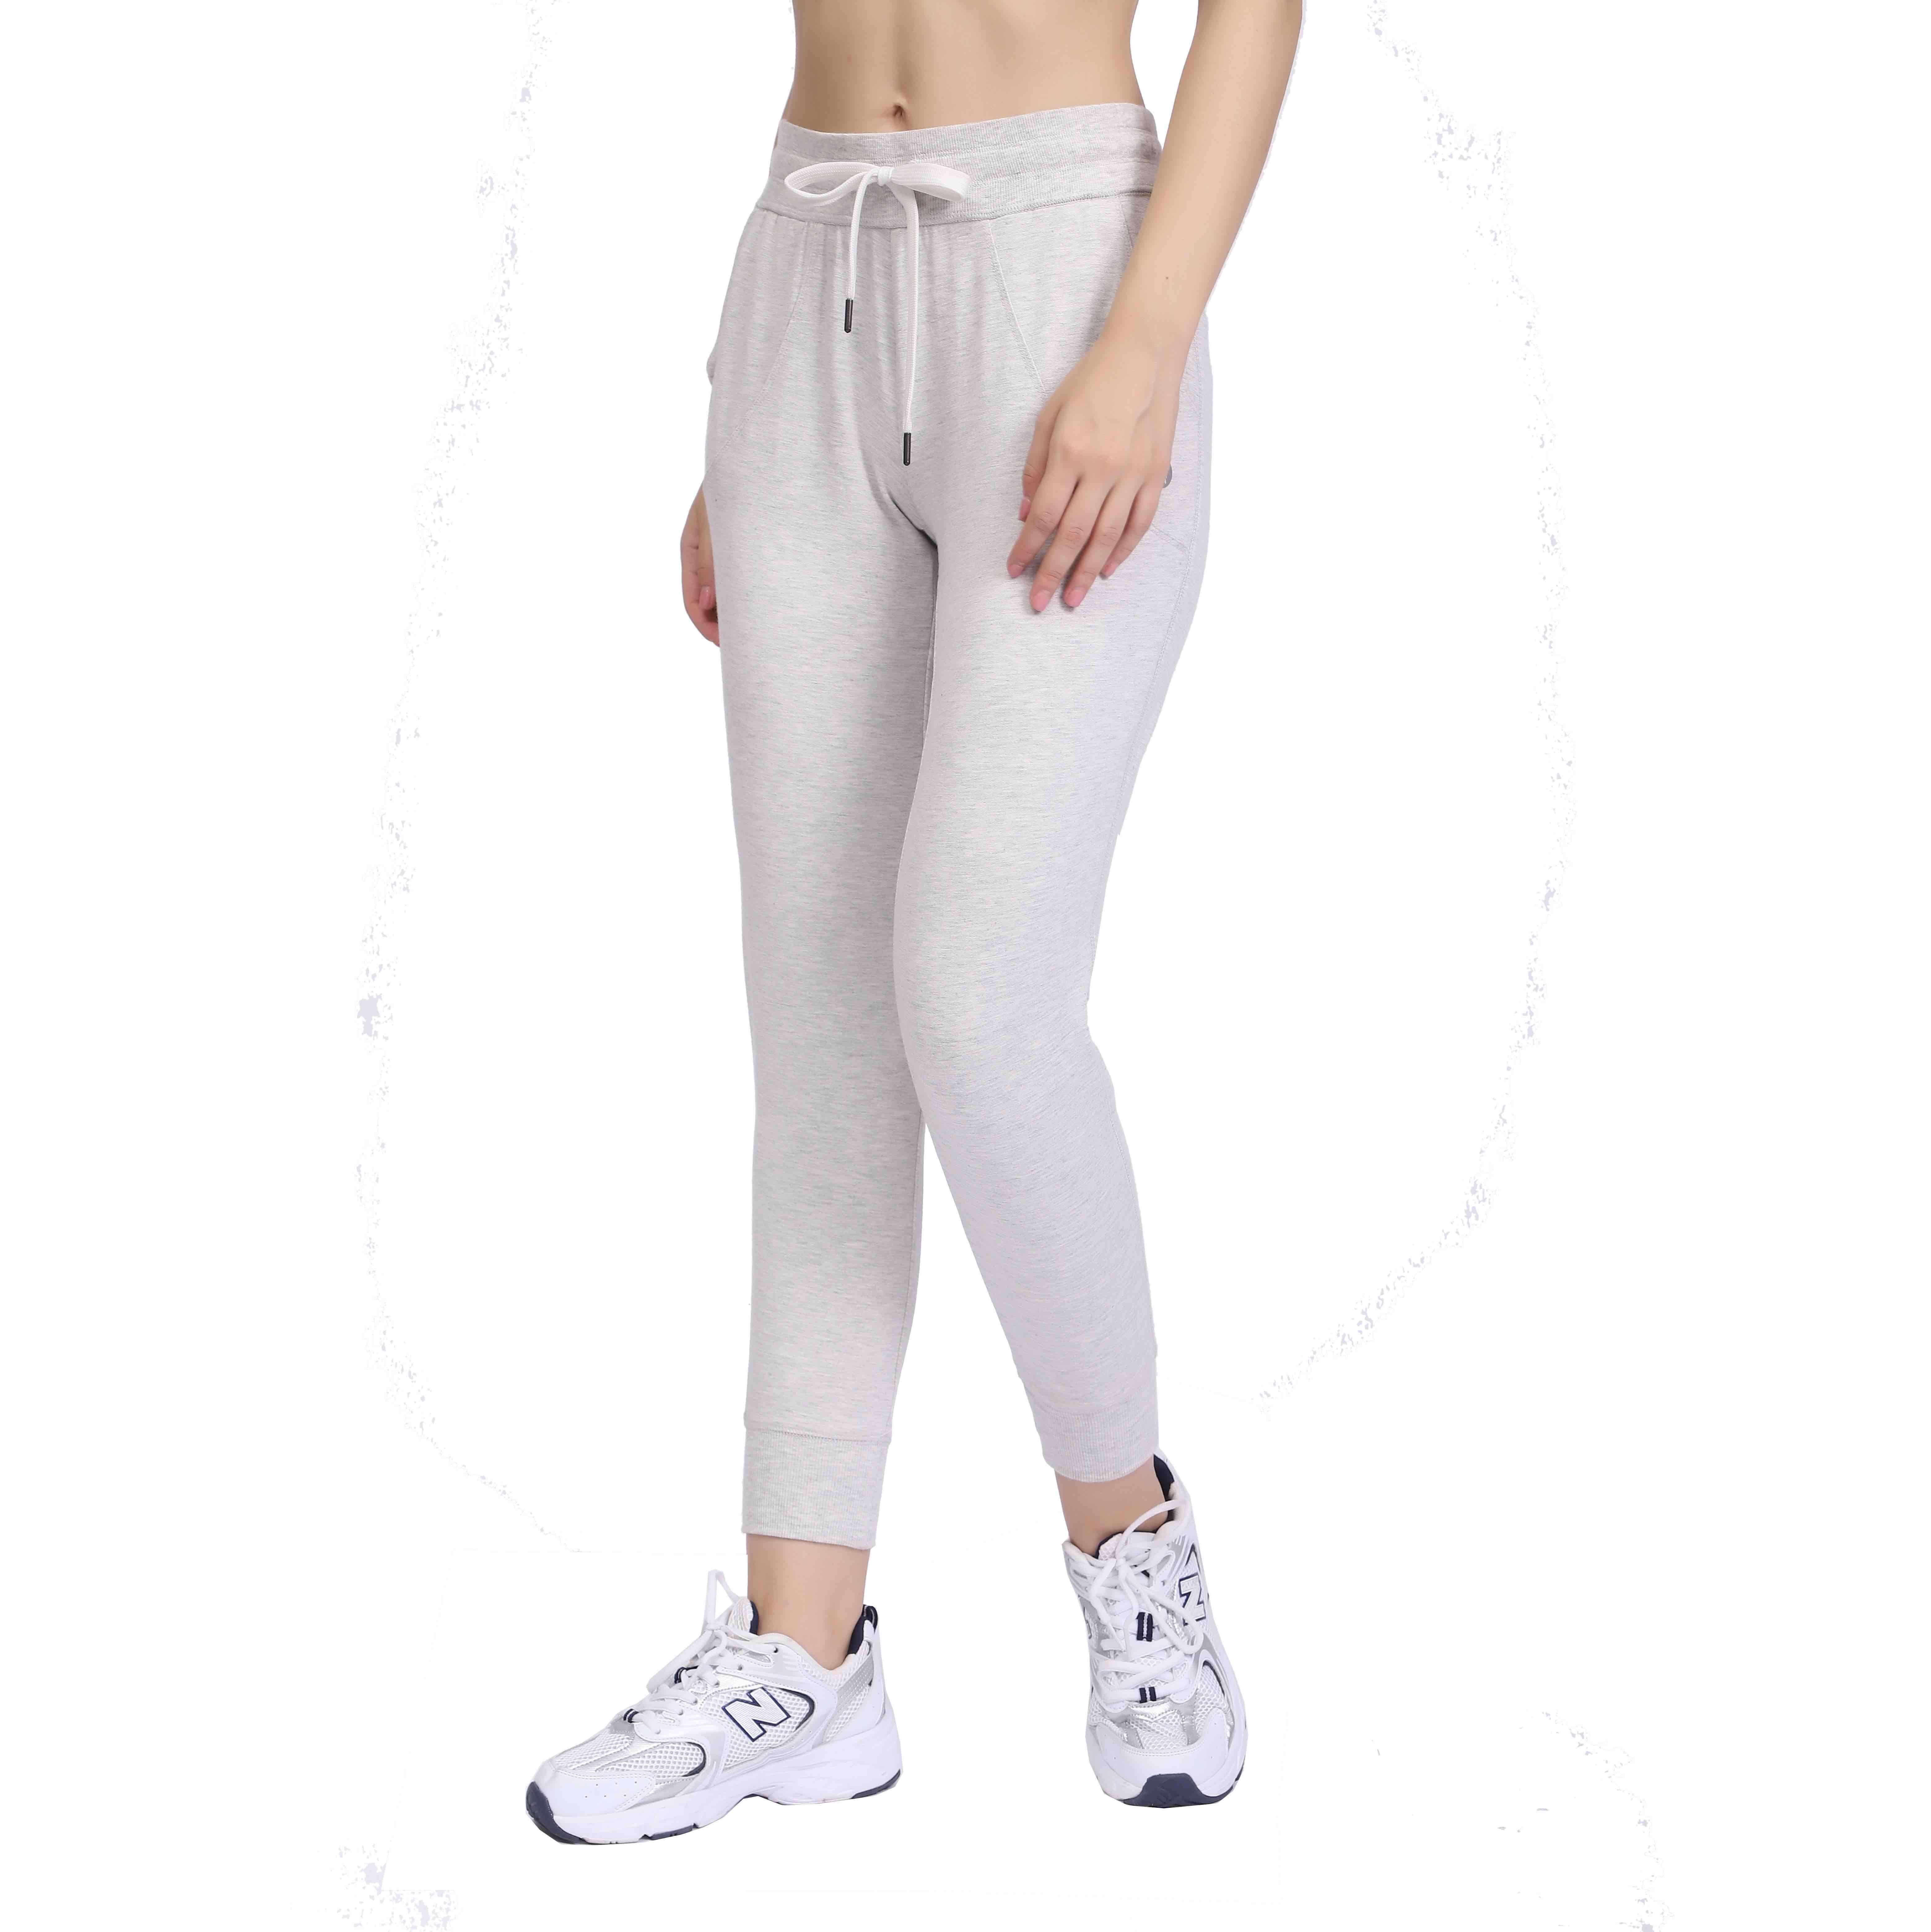 Women's Athletic Jogger Pants Drawstring Sweatpants with Pockets